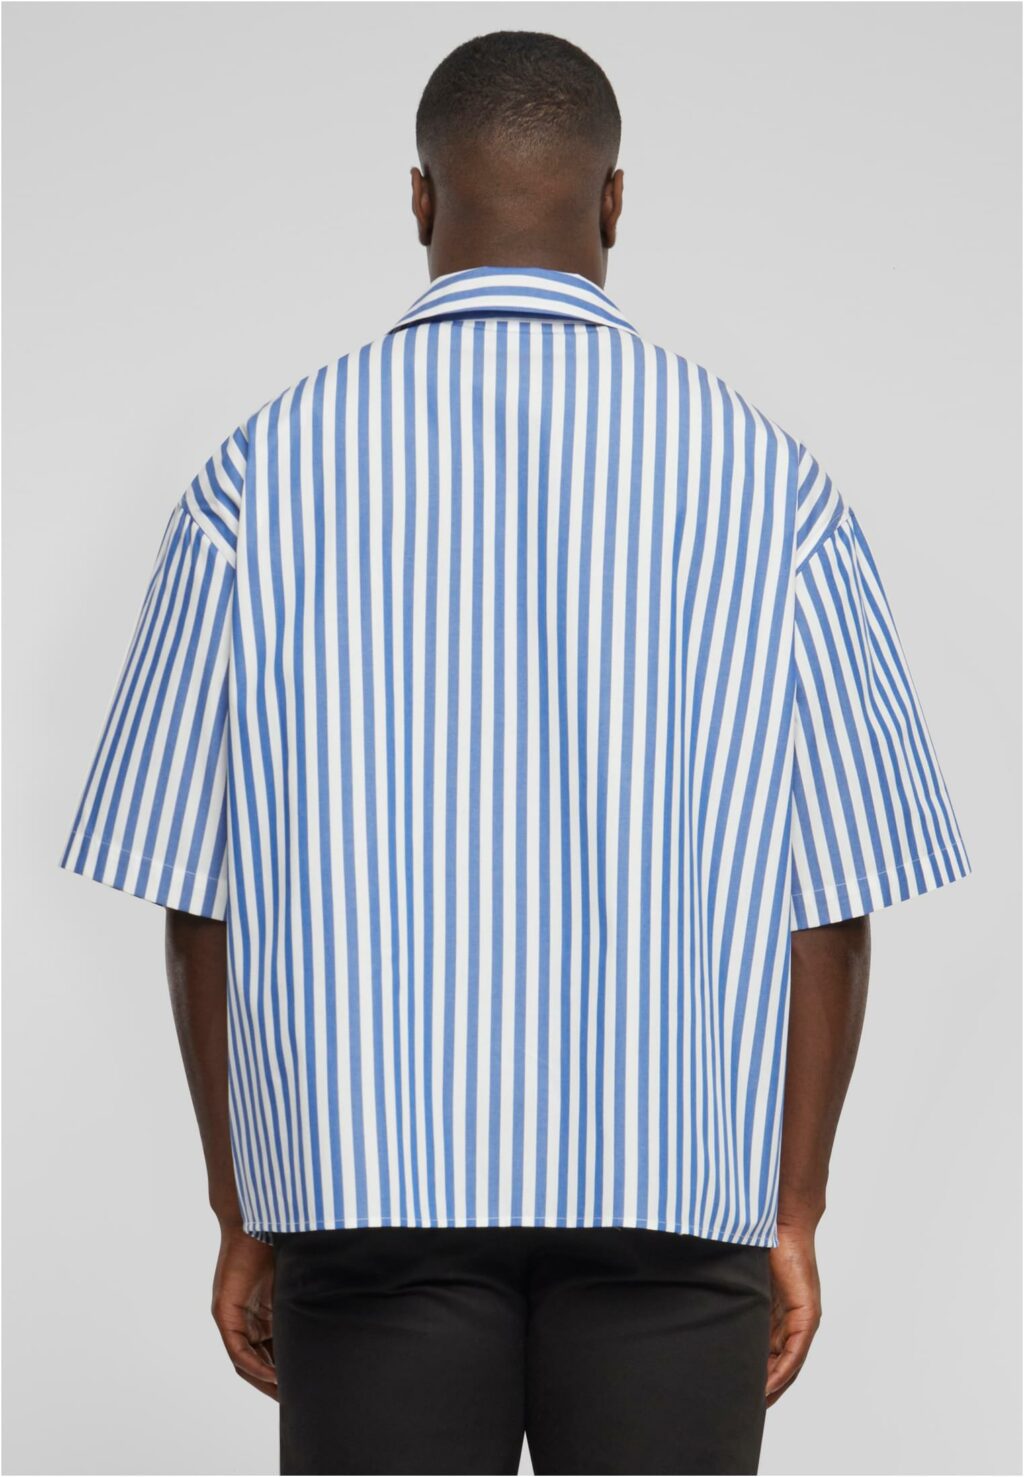 Urban Classics Striped Short Sleeve Summer Shirt white/blue TB6658